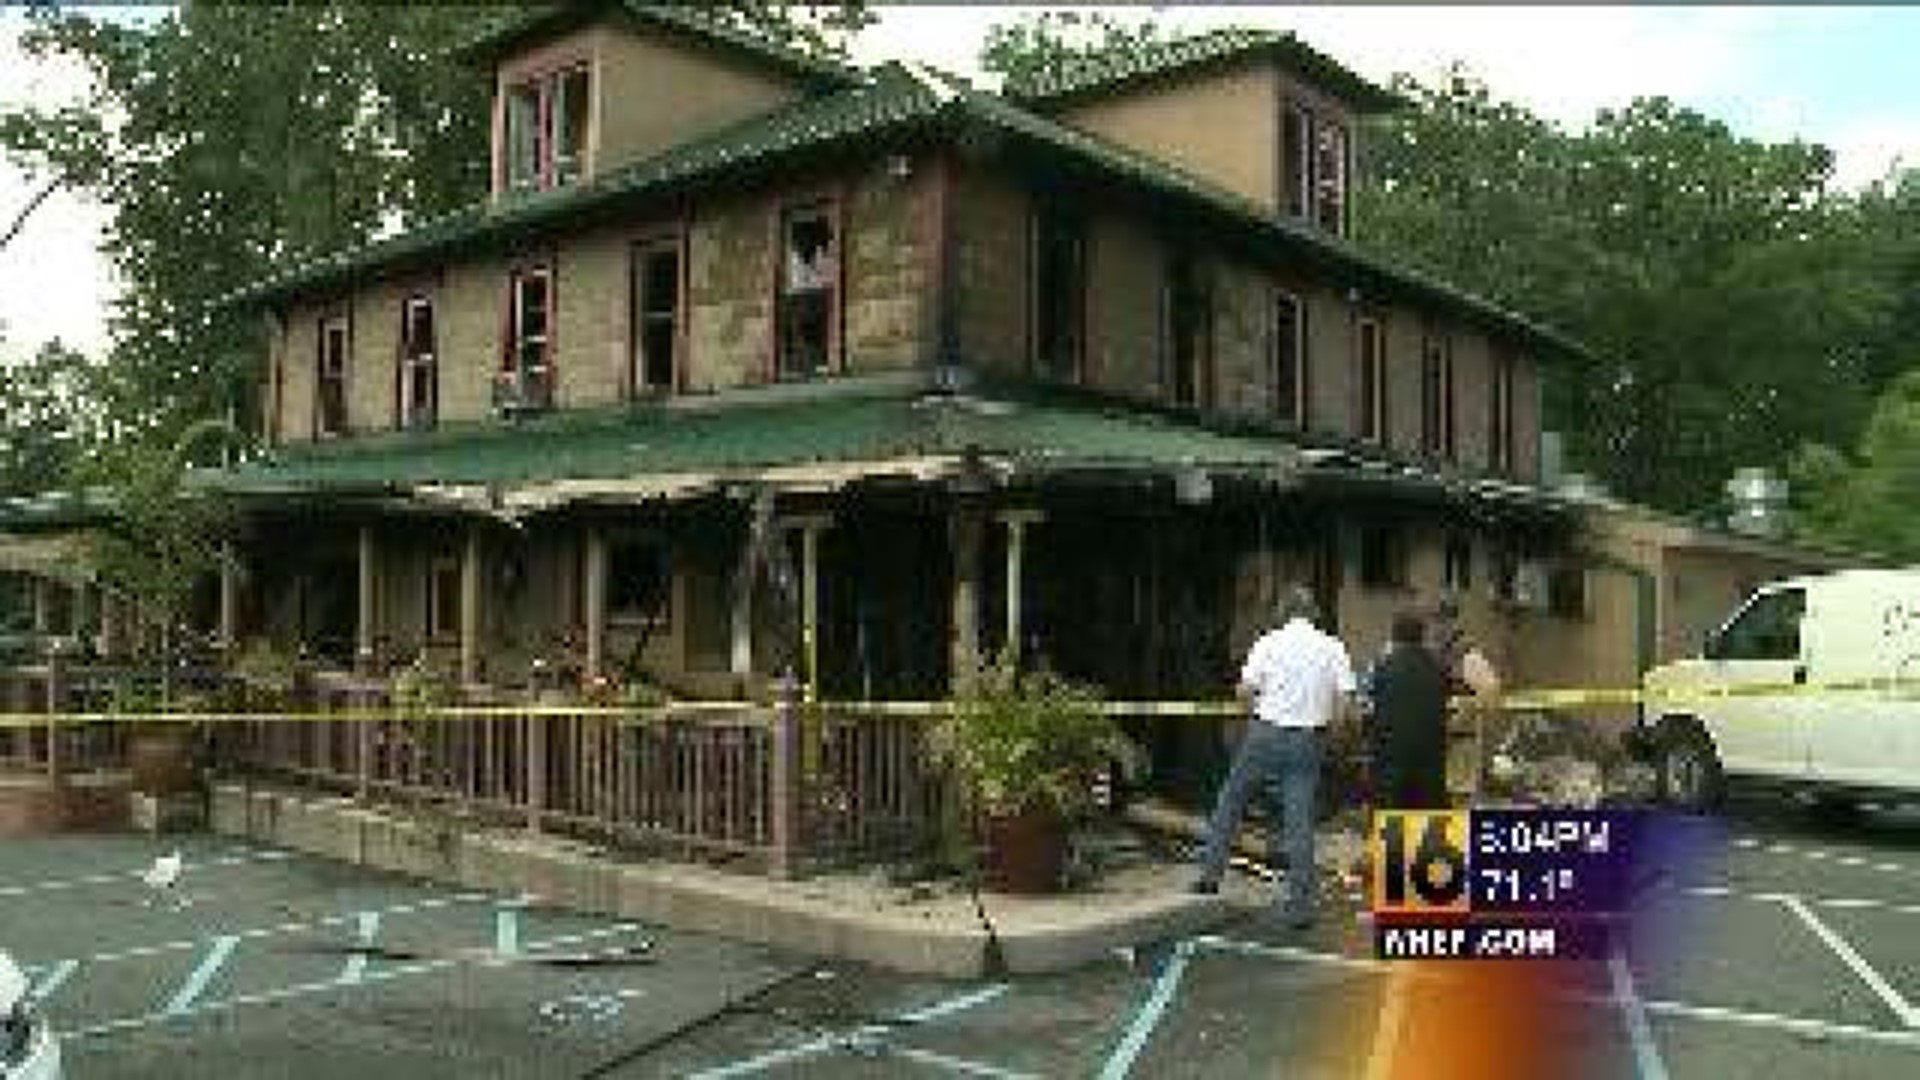 Landmark Restaurant Wrecked By Flames